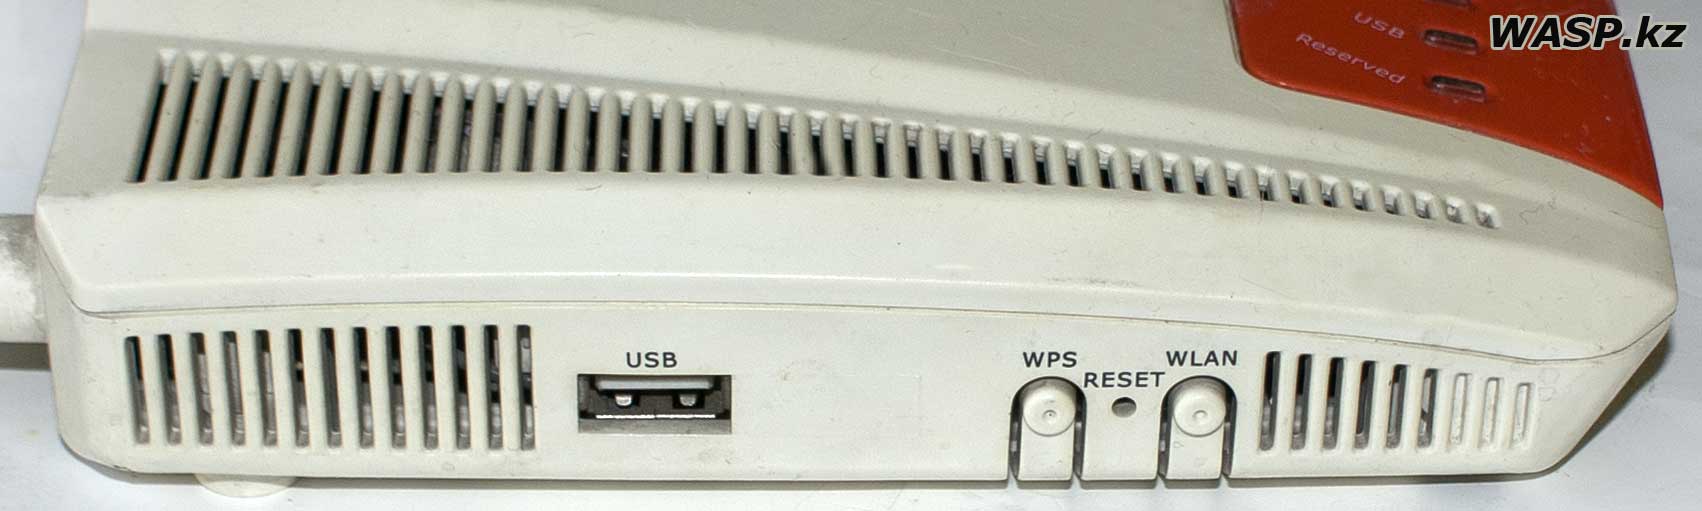 ECI B-FOCuS O-4G2PWM зачем USB разъем сбоку терминала